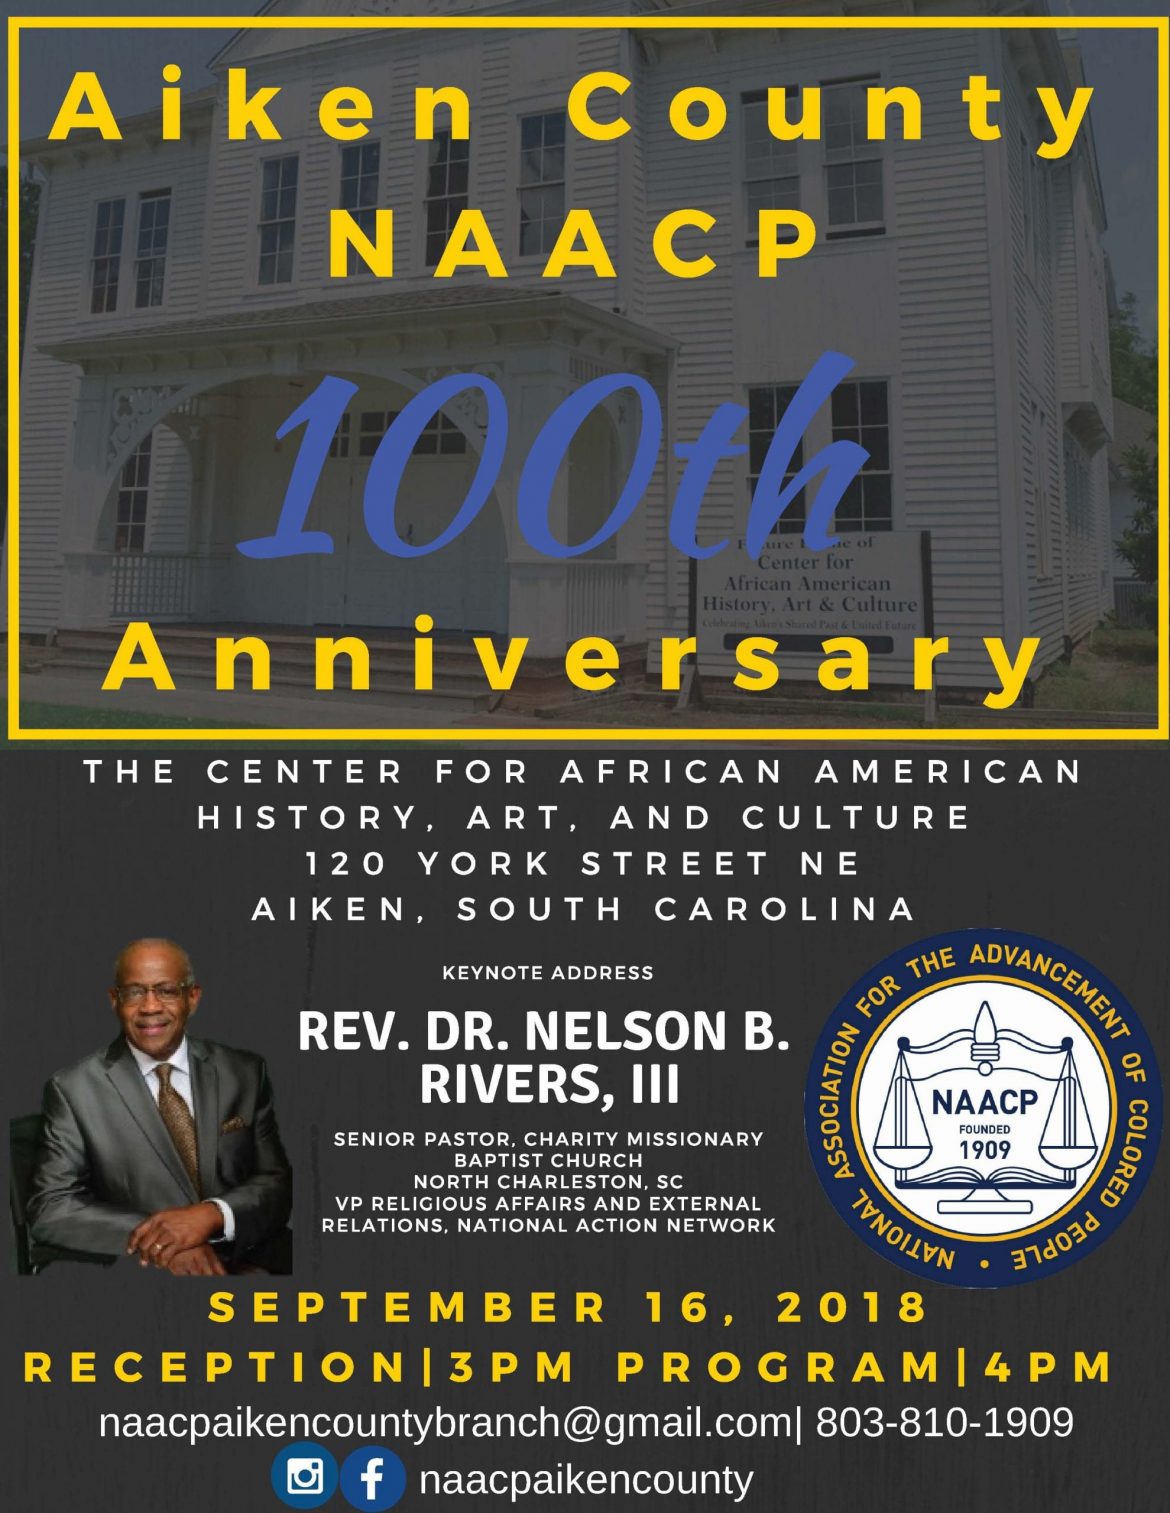 Aiken County NAACP 100th Anniversary